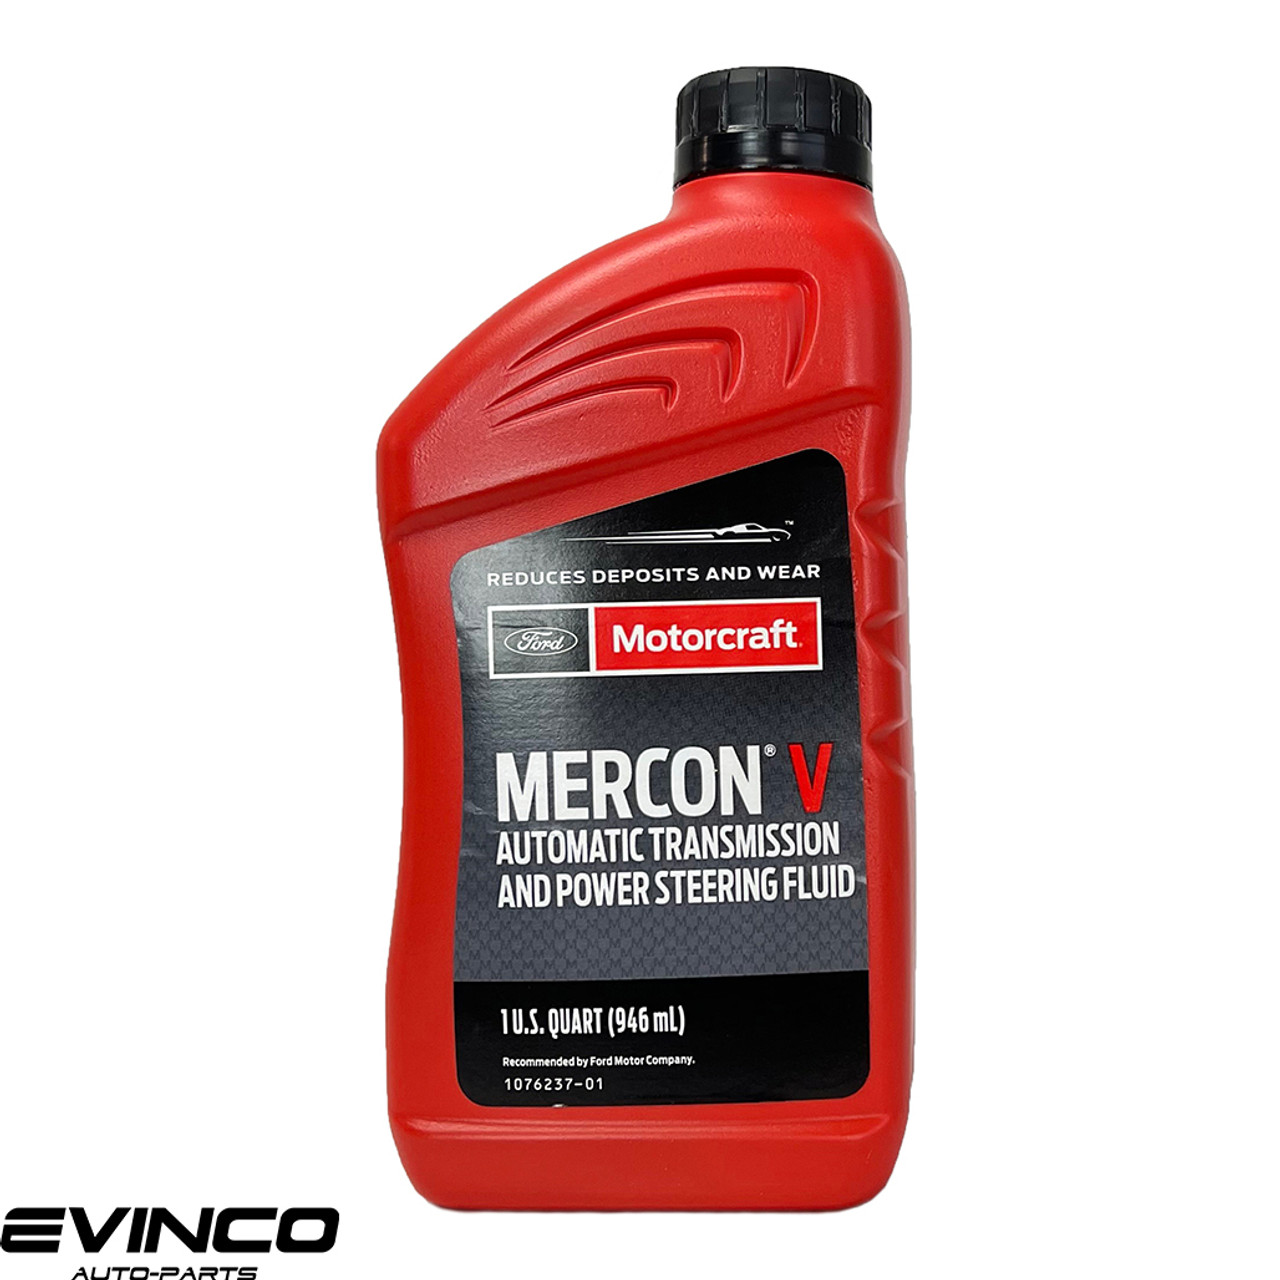 Motorcraft Mercon LV Automatic Transmission Fluid 5Quart - Dew Limited